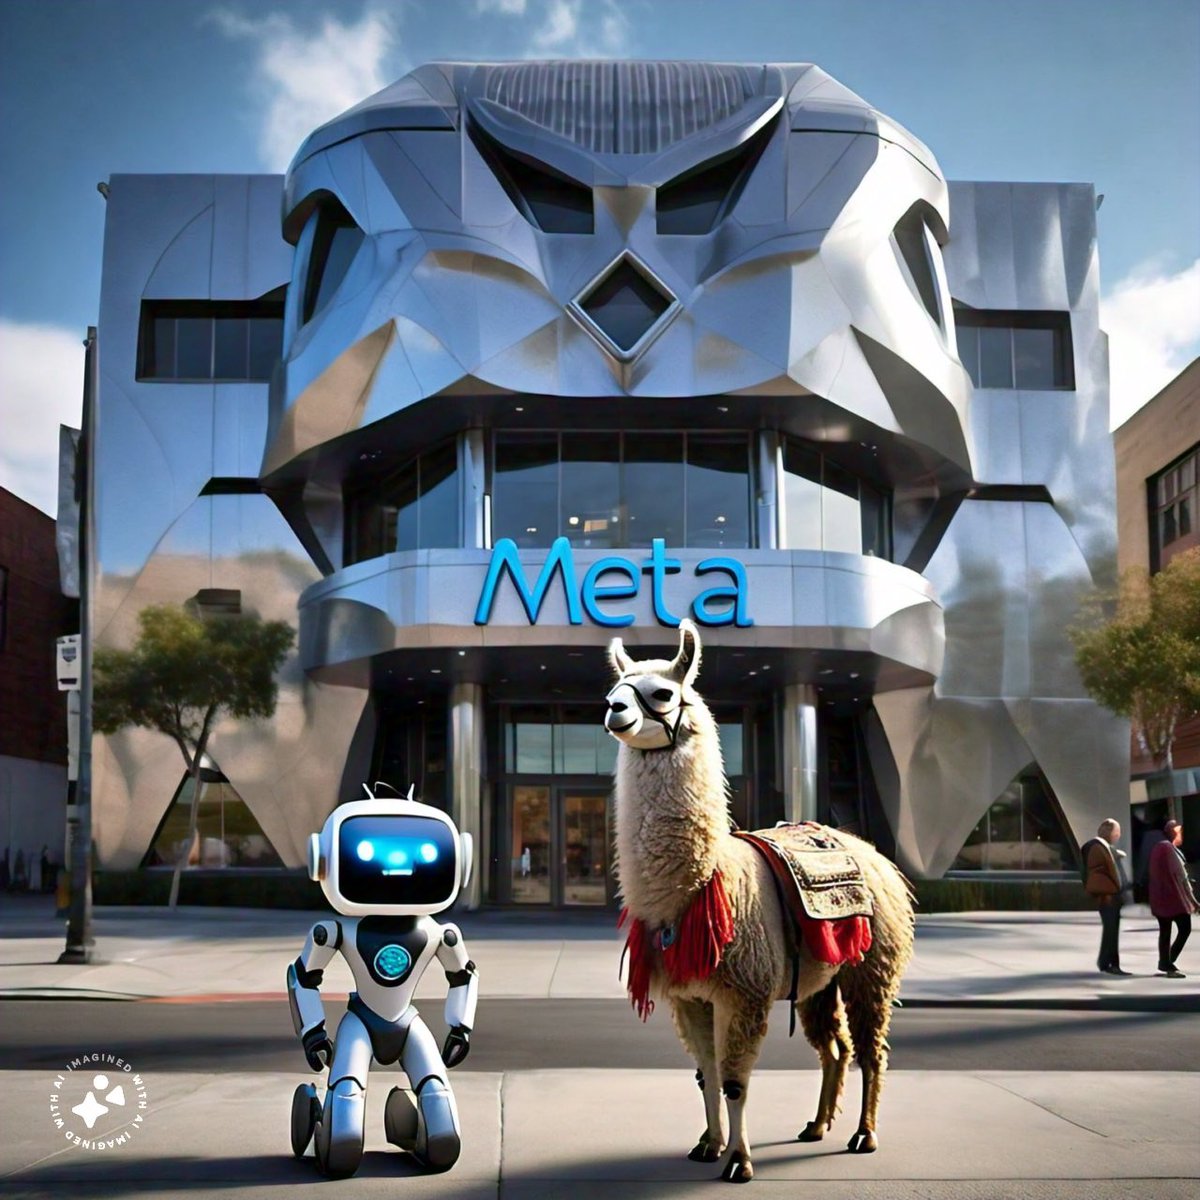 New Llama just dropped. 🦙 @Meta just released its new AI model, #Llama3, so I had Meta AI imagine a Llama next to an AI in front of Meta HQ.